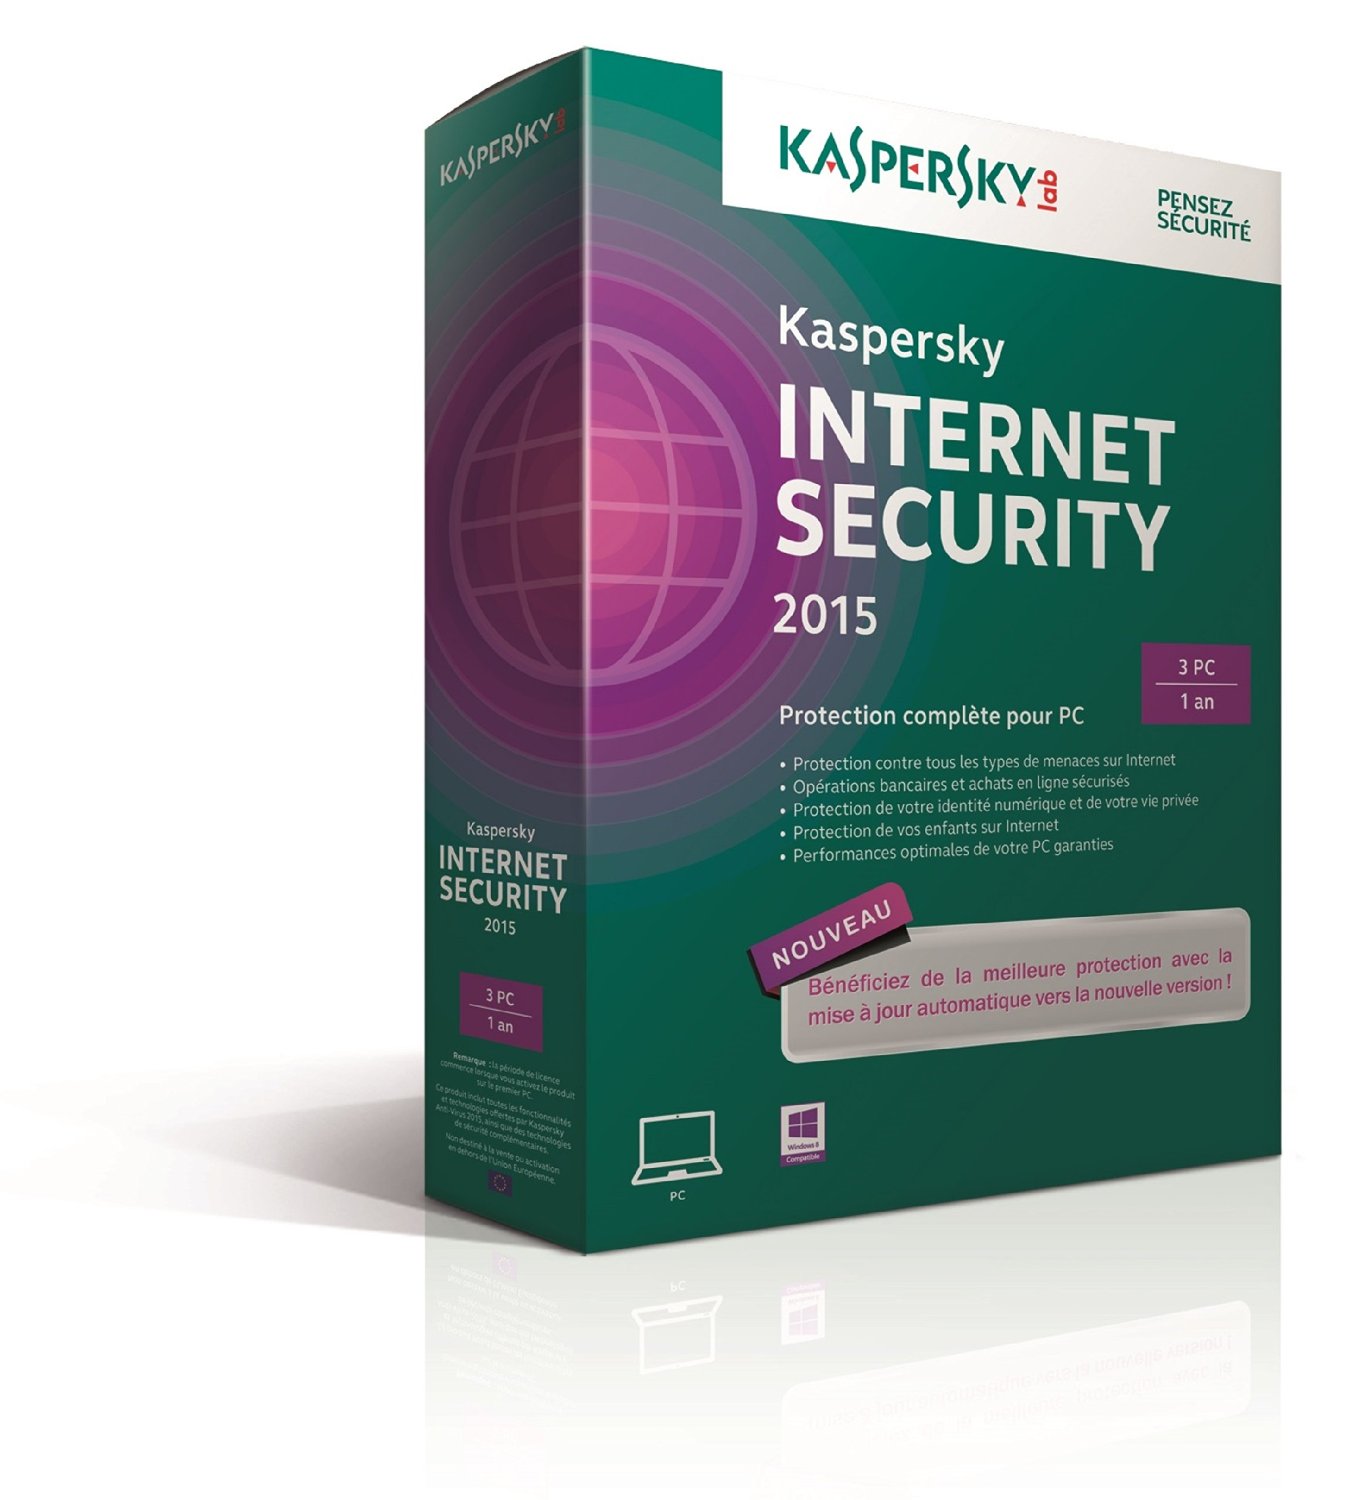  Kaspersky Antivirus and Internet Security 2015 v15